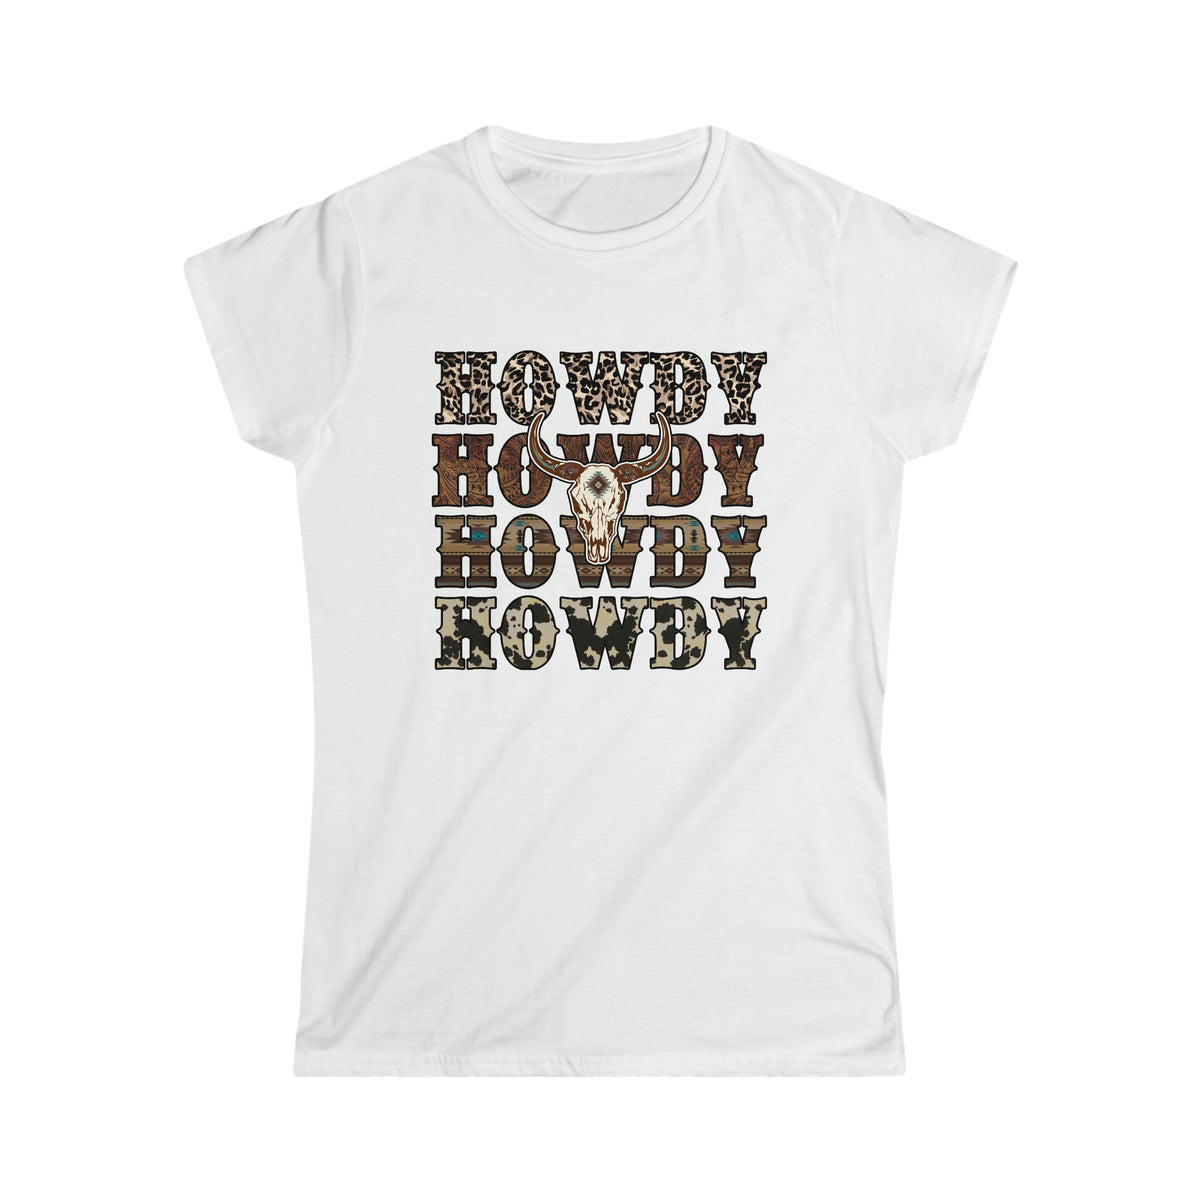 Howdy Howdy Howdy Women's T-shirt - Salty Medic Clothing Co.